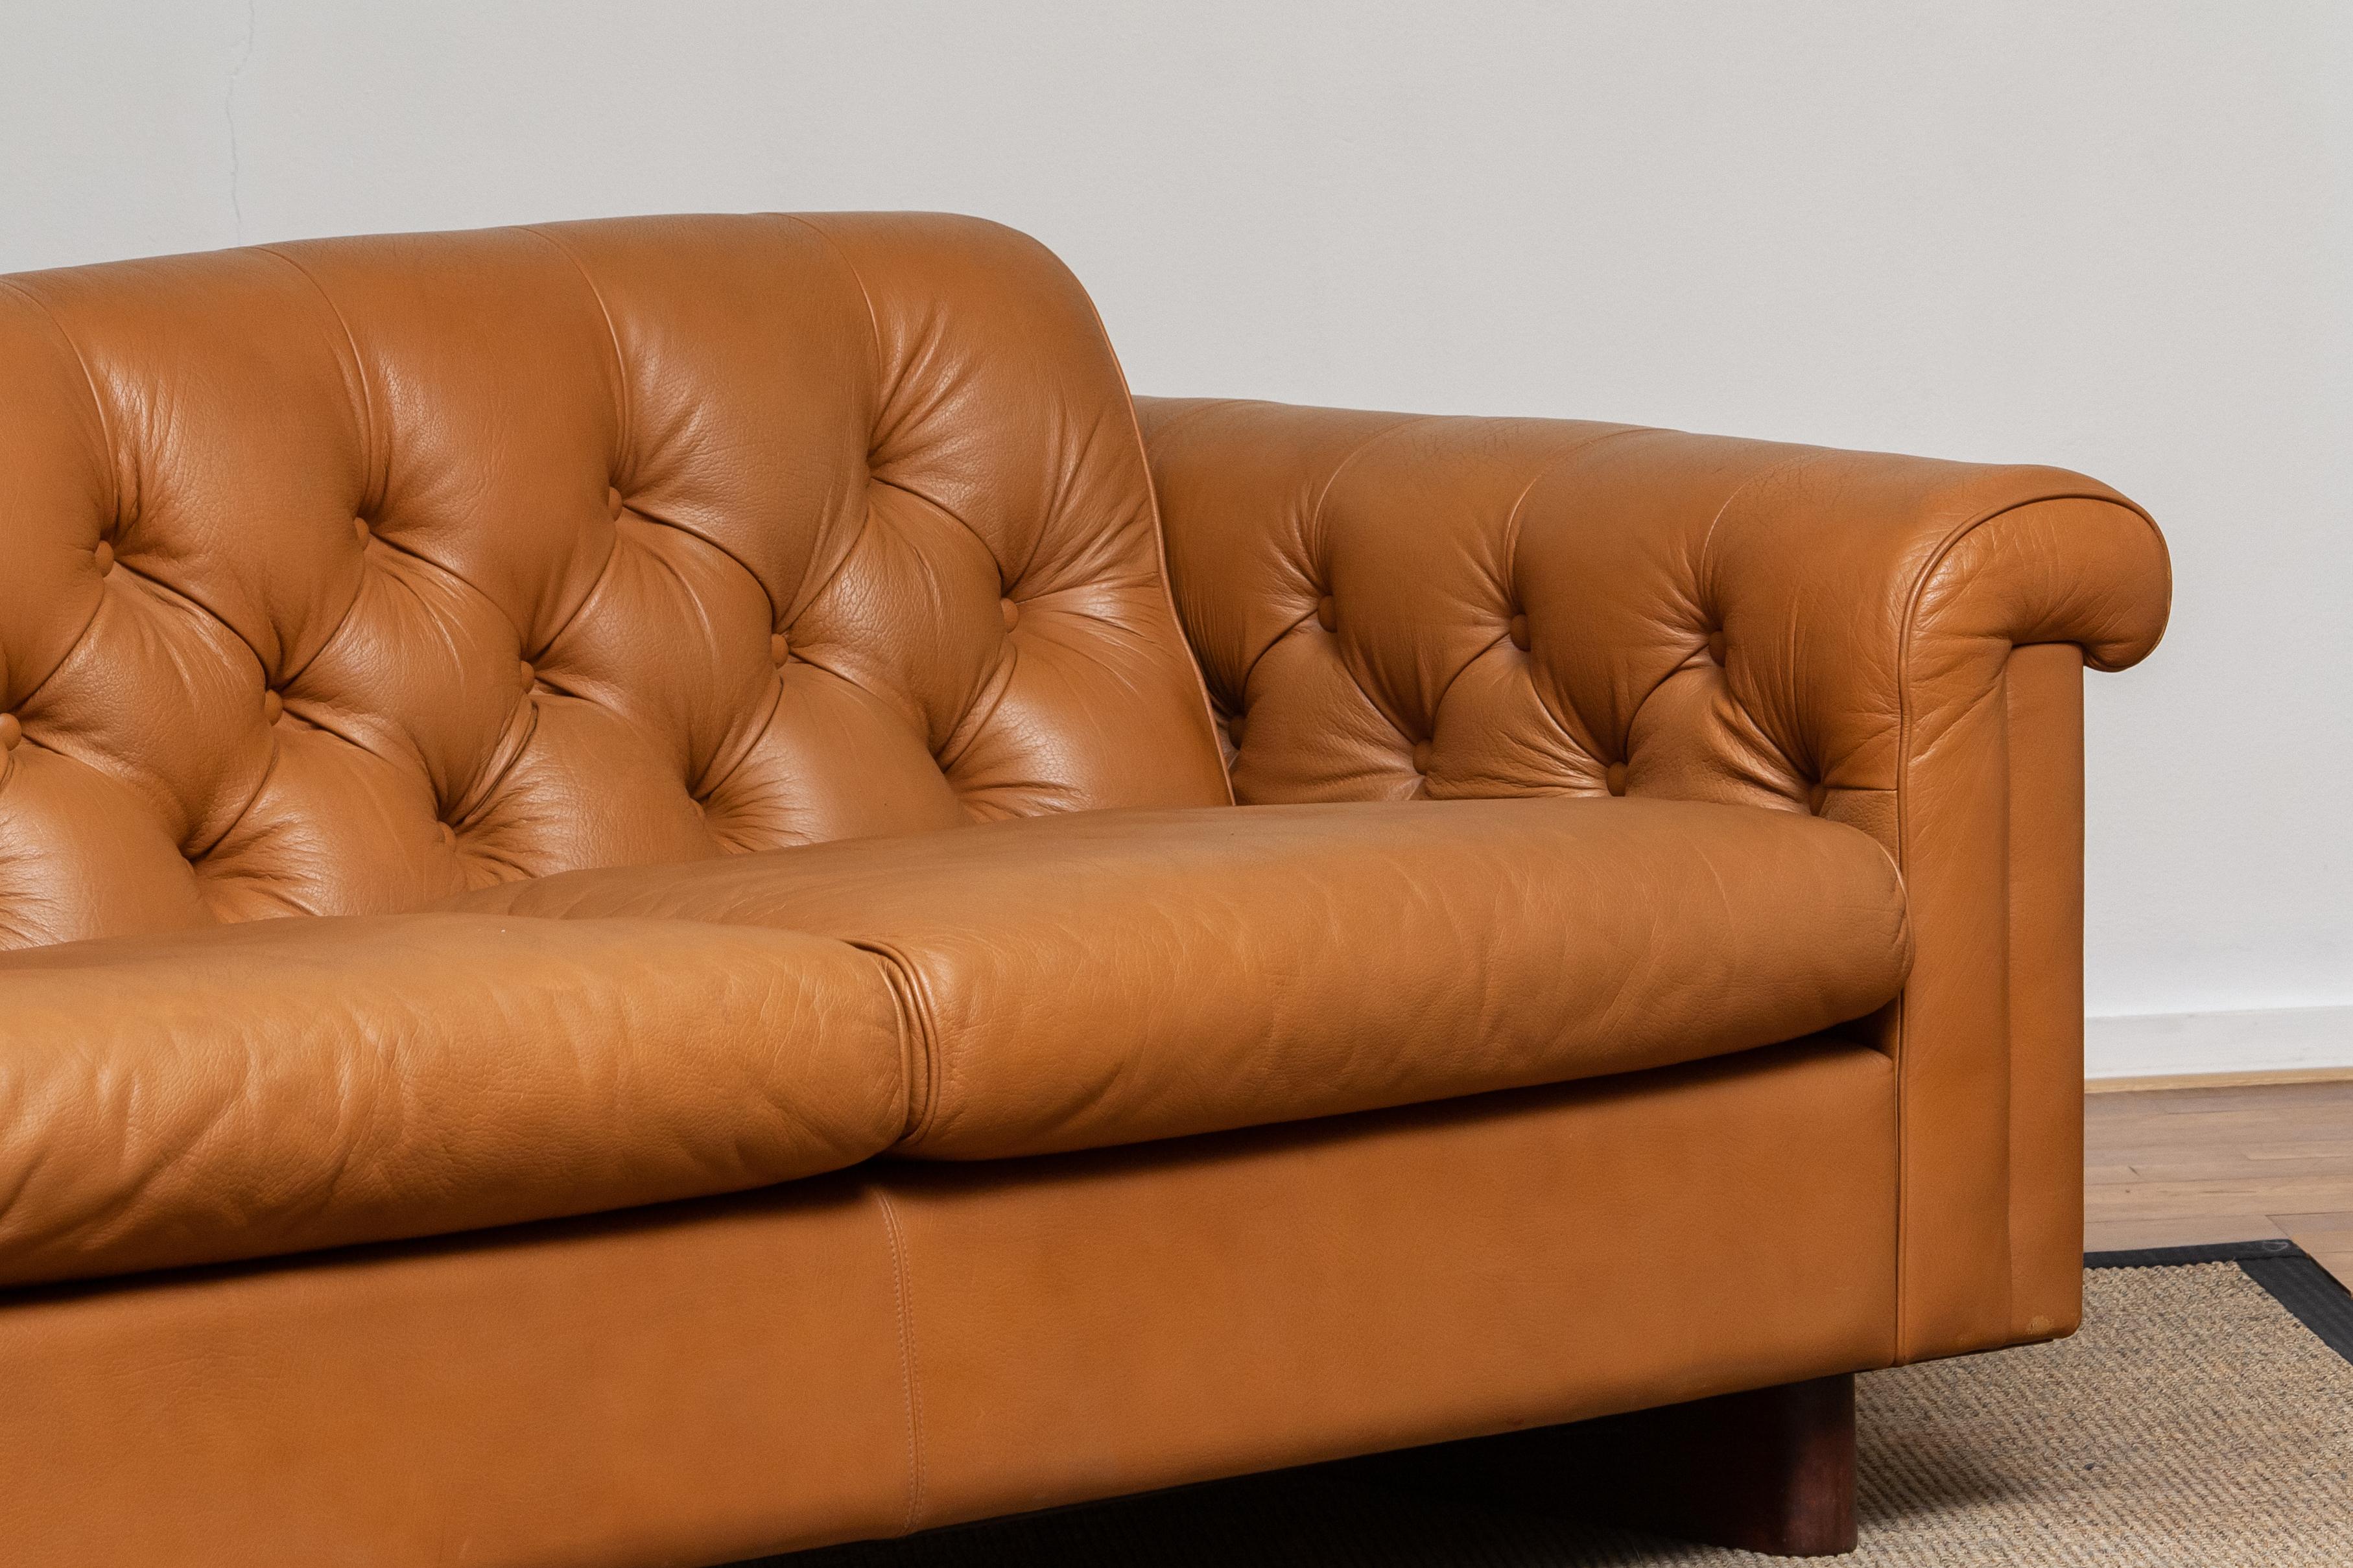 1970's Sofa by Karl Erik Ekselius for Joc Design in Camel Color Tufted Leather 2